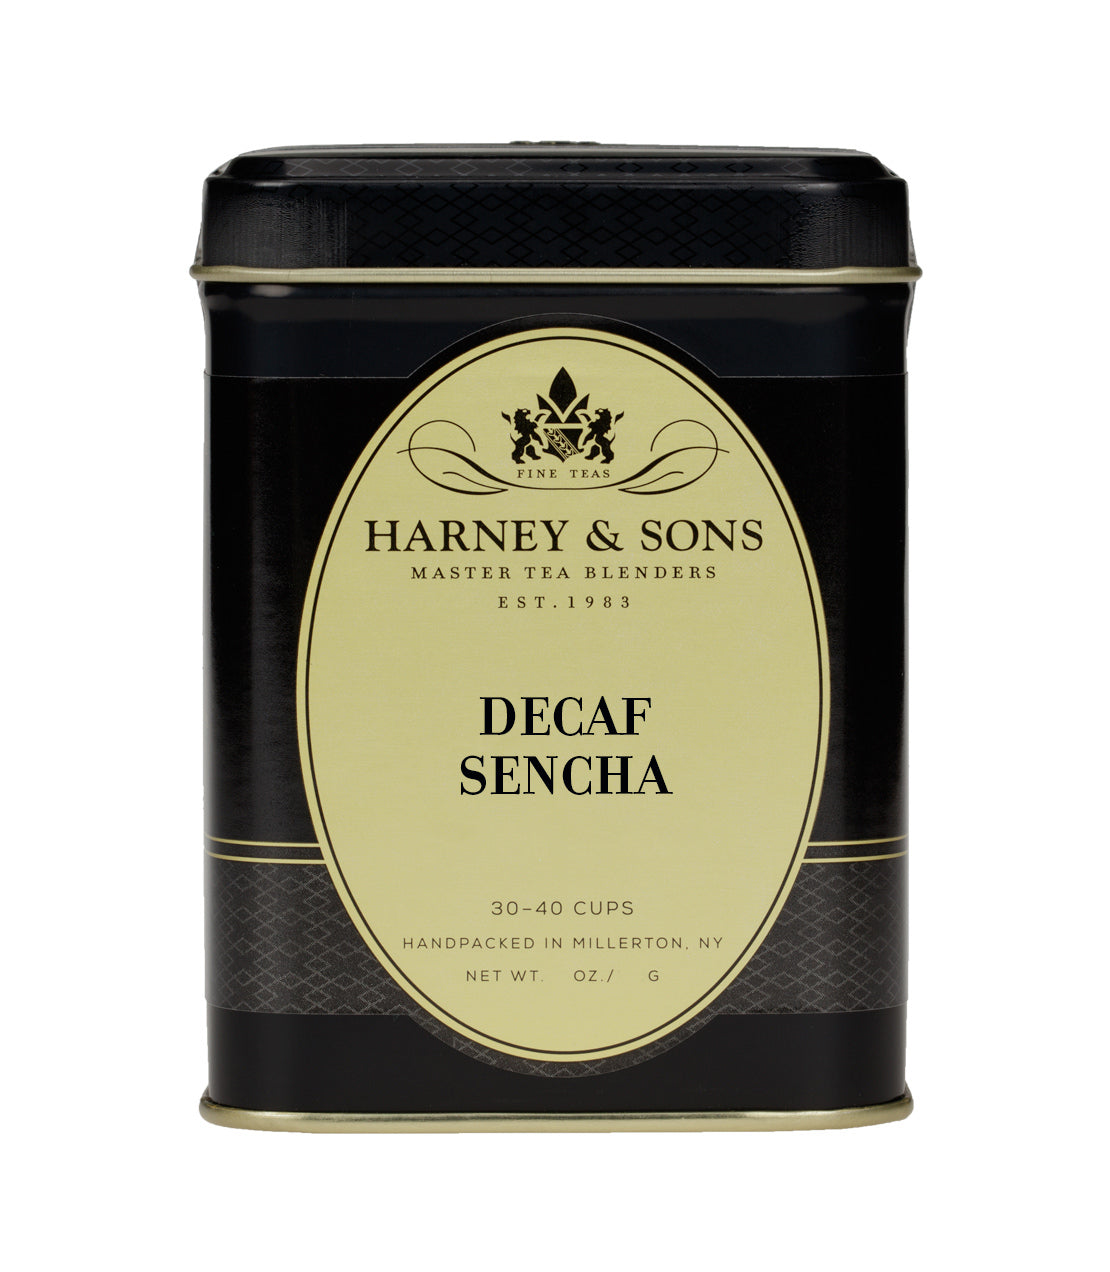 Decaf Sencha - Loose 4 oz. Tin - Harney & Sons Fine Teas